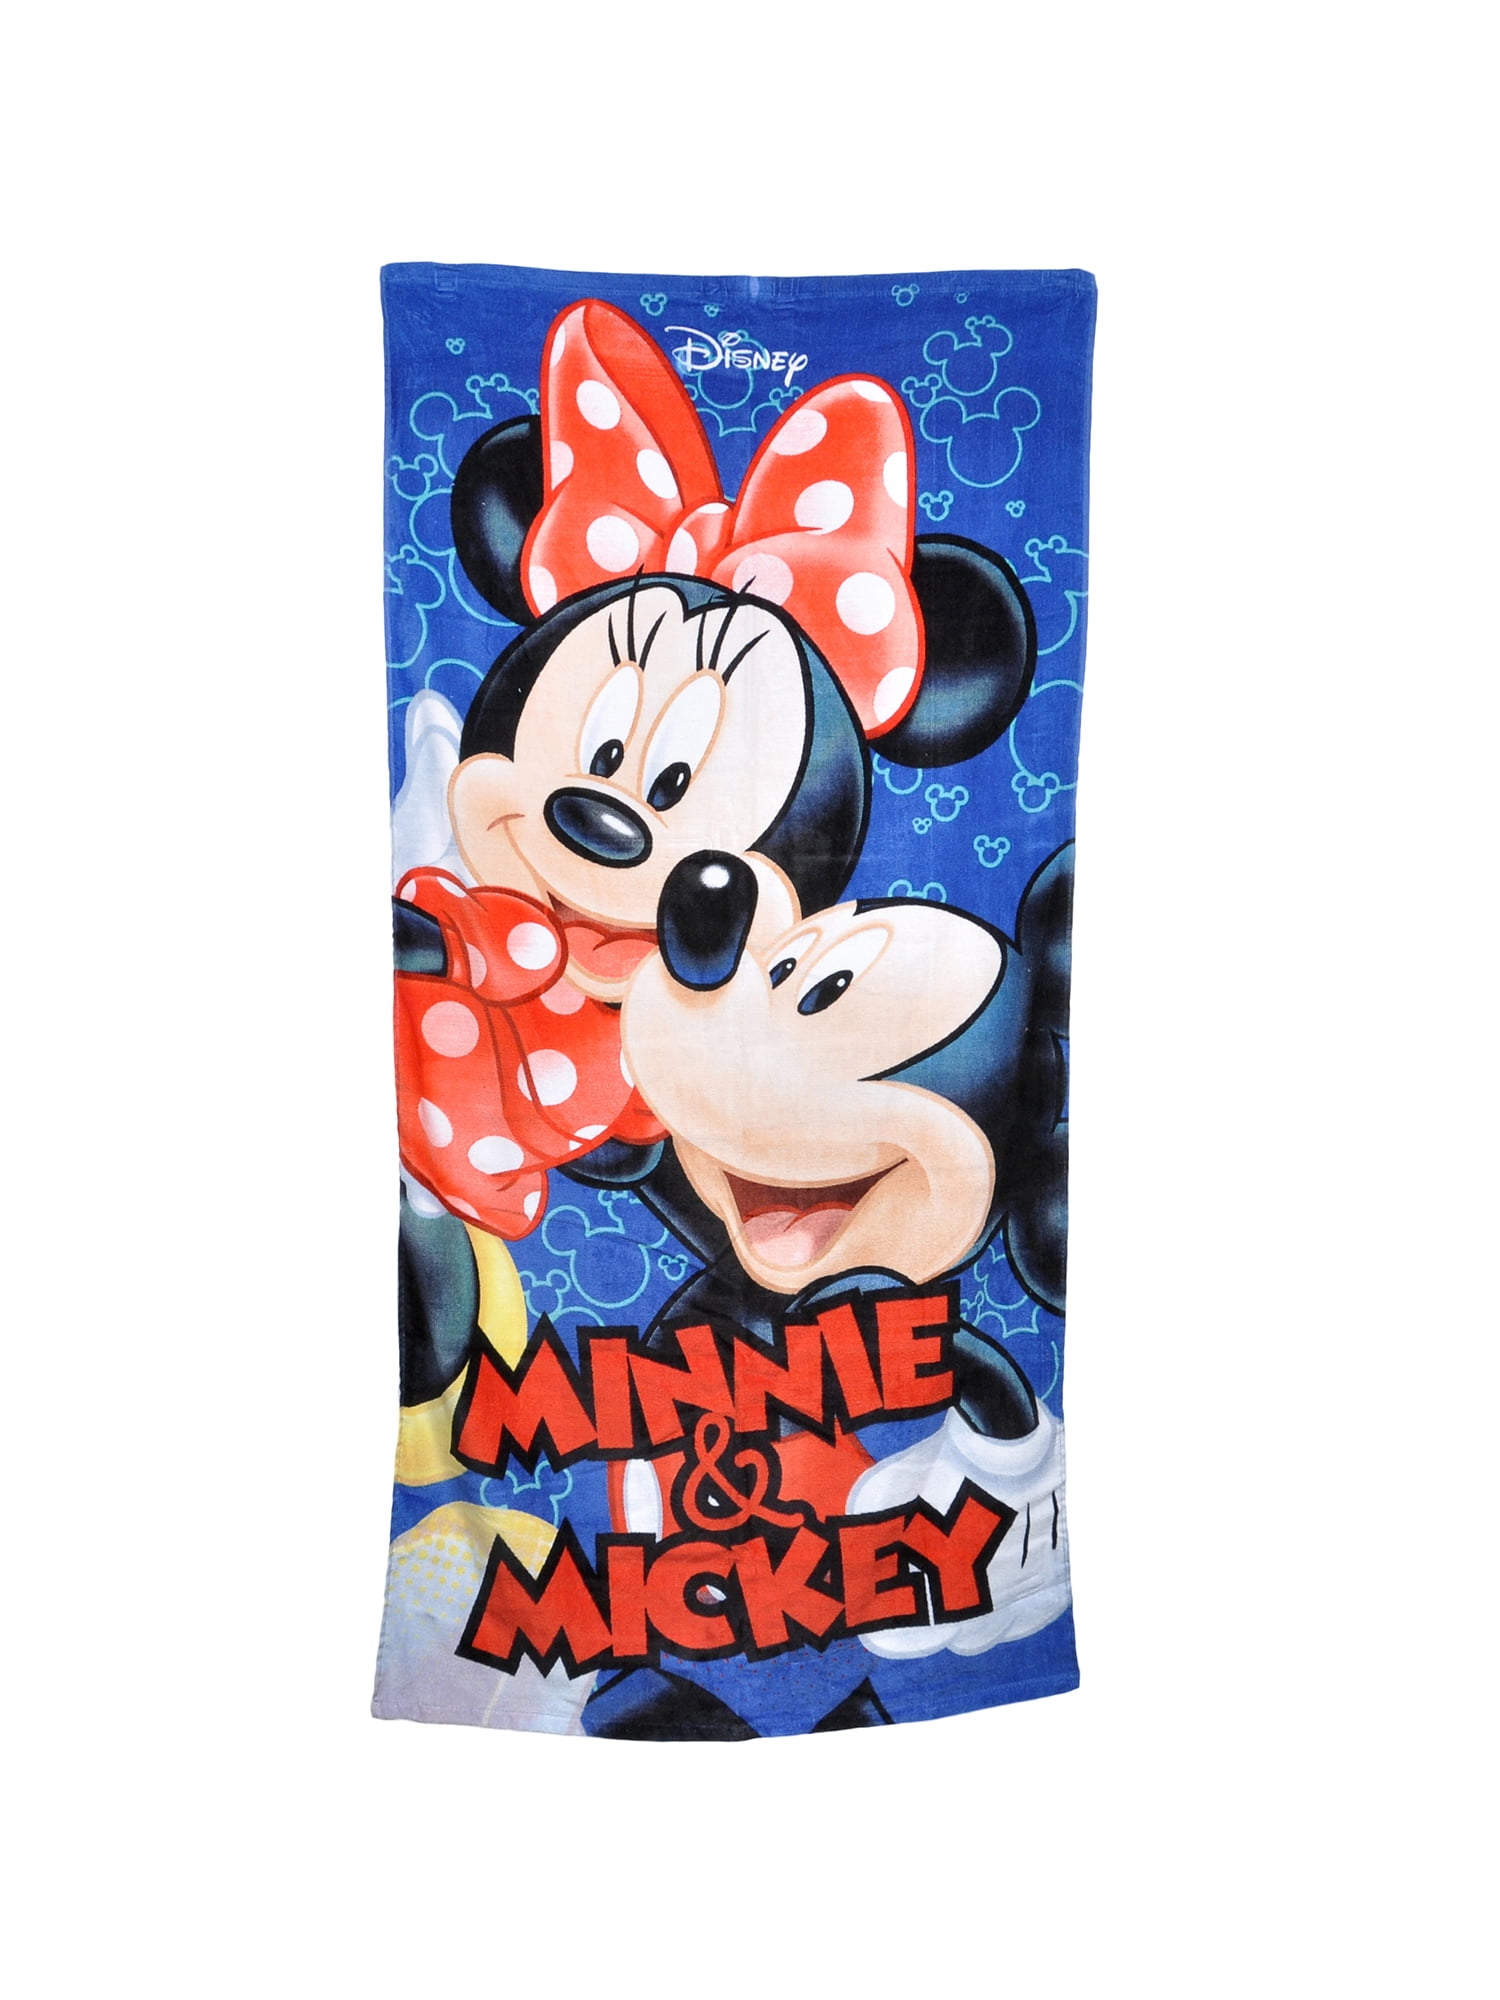 Disney Minnie Mickey Mouse  Princess Goofy  Beach Towel 58x28  w/Sling Bag